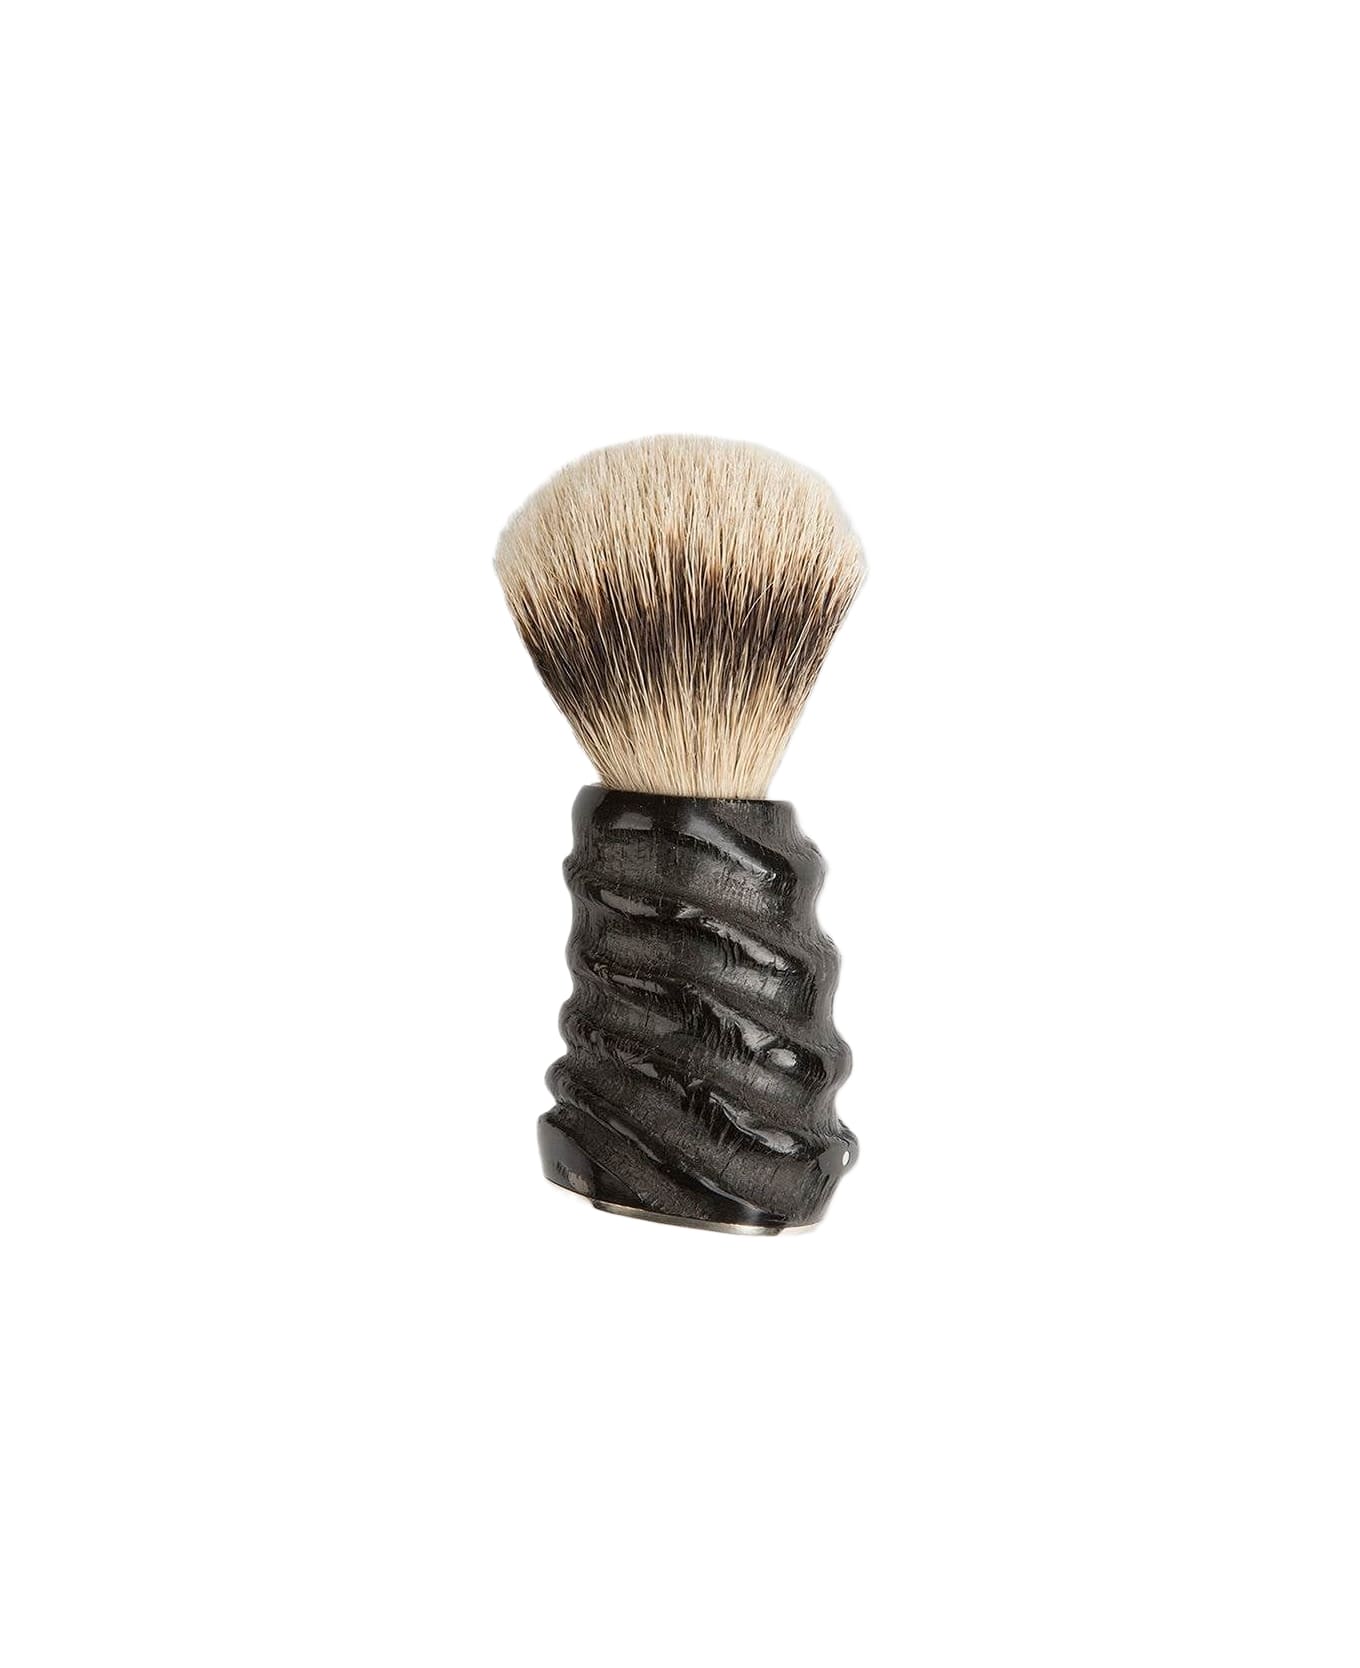 Larusmiani Shaving Brush 'e. Montale' Beauty - Neutral